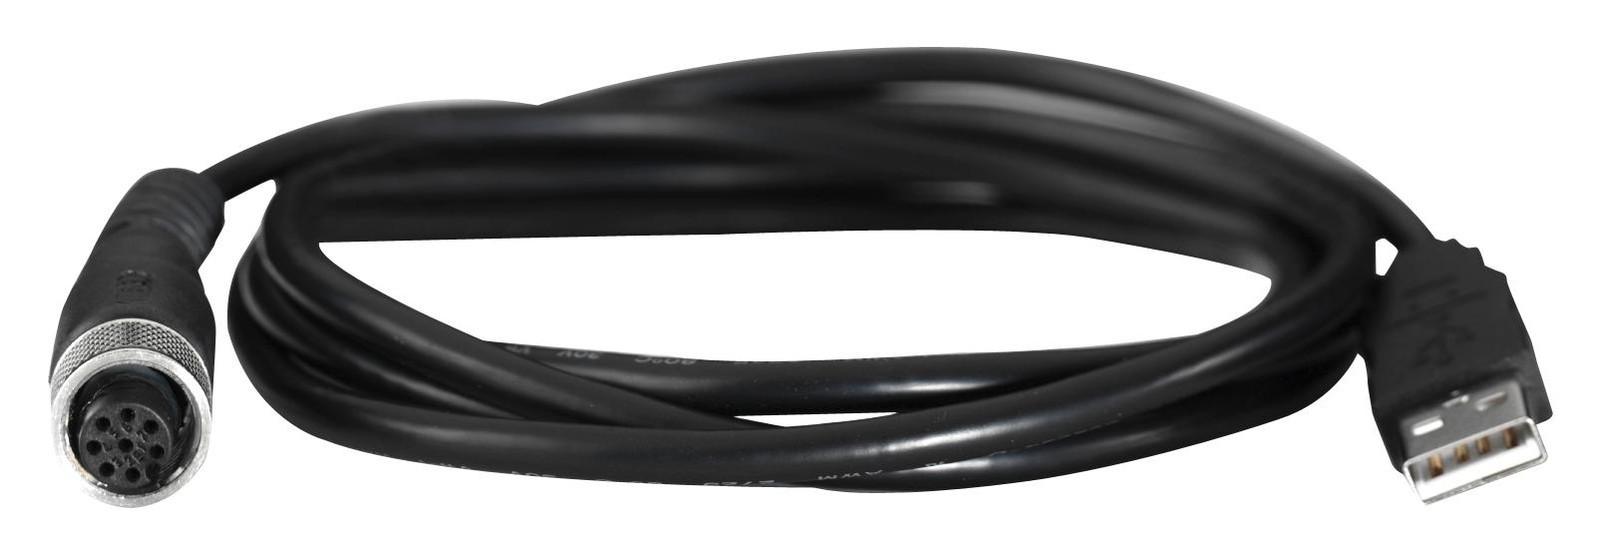 Rohde & Schwarz Nrp-Zku.03 Usb Interface Cable, 1.5M, Power Sensor